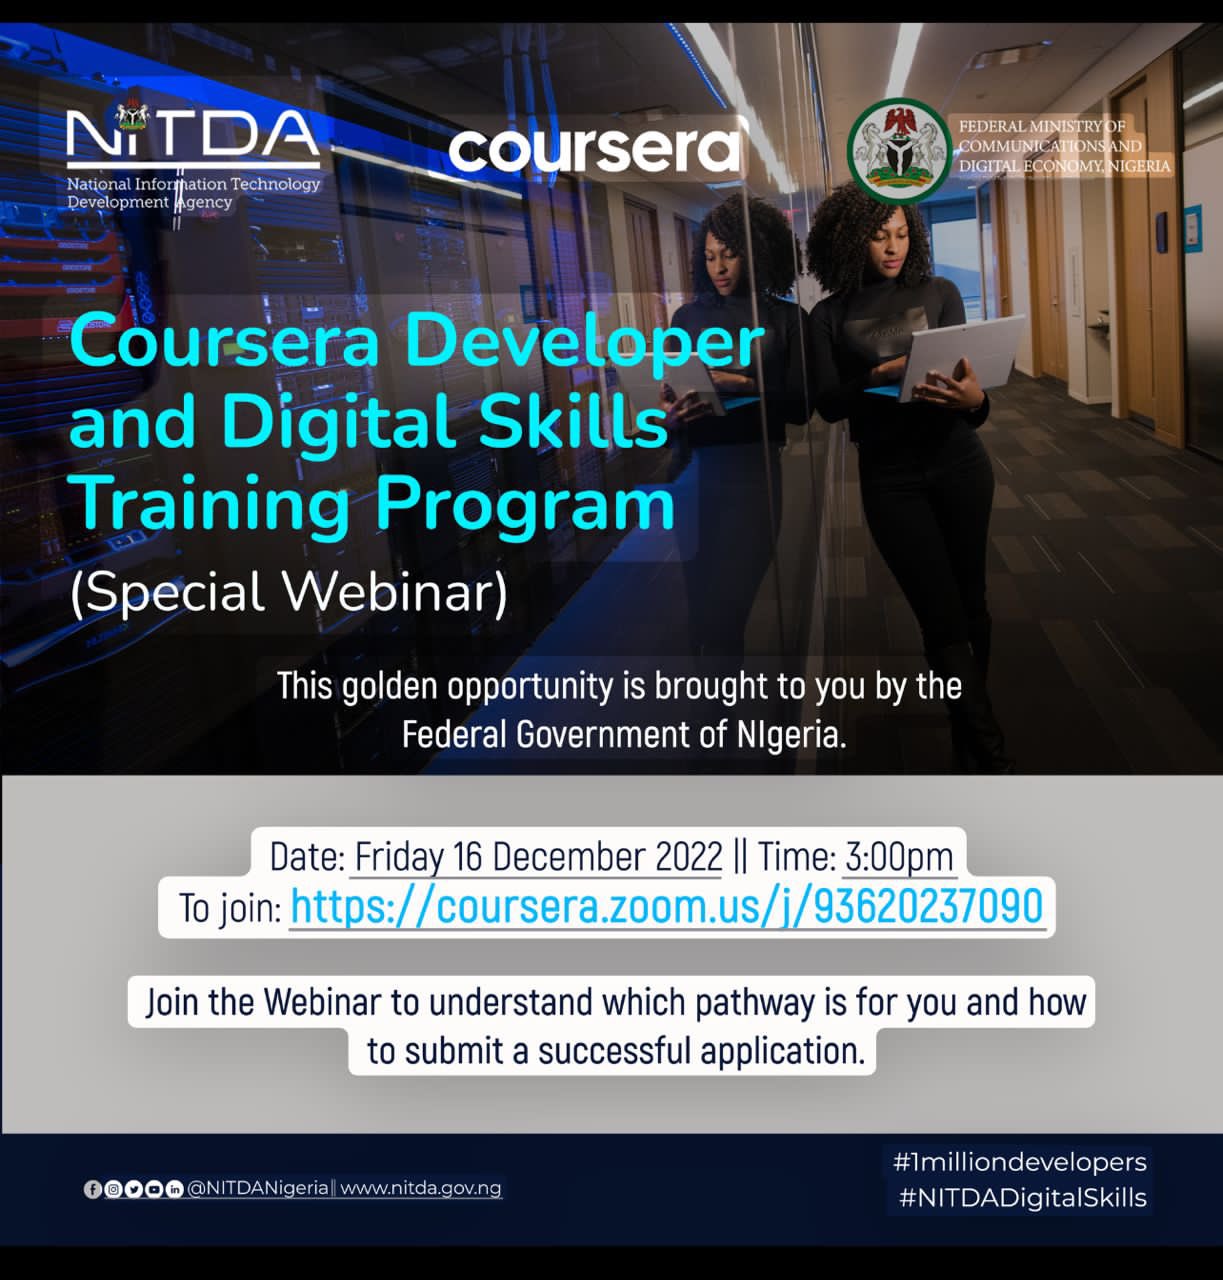 NITDA: Coursera Developer and Digital Skills Training Program